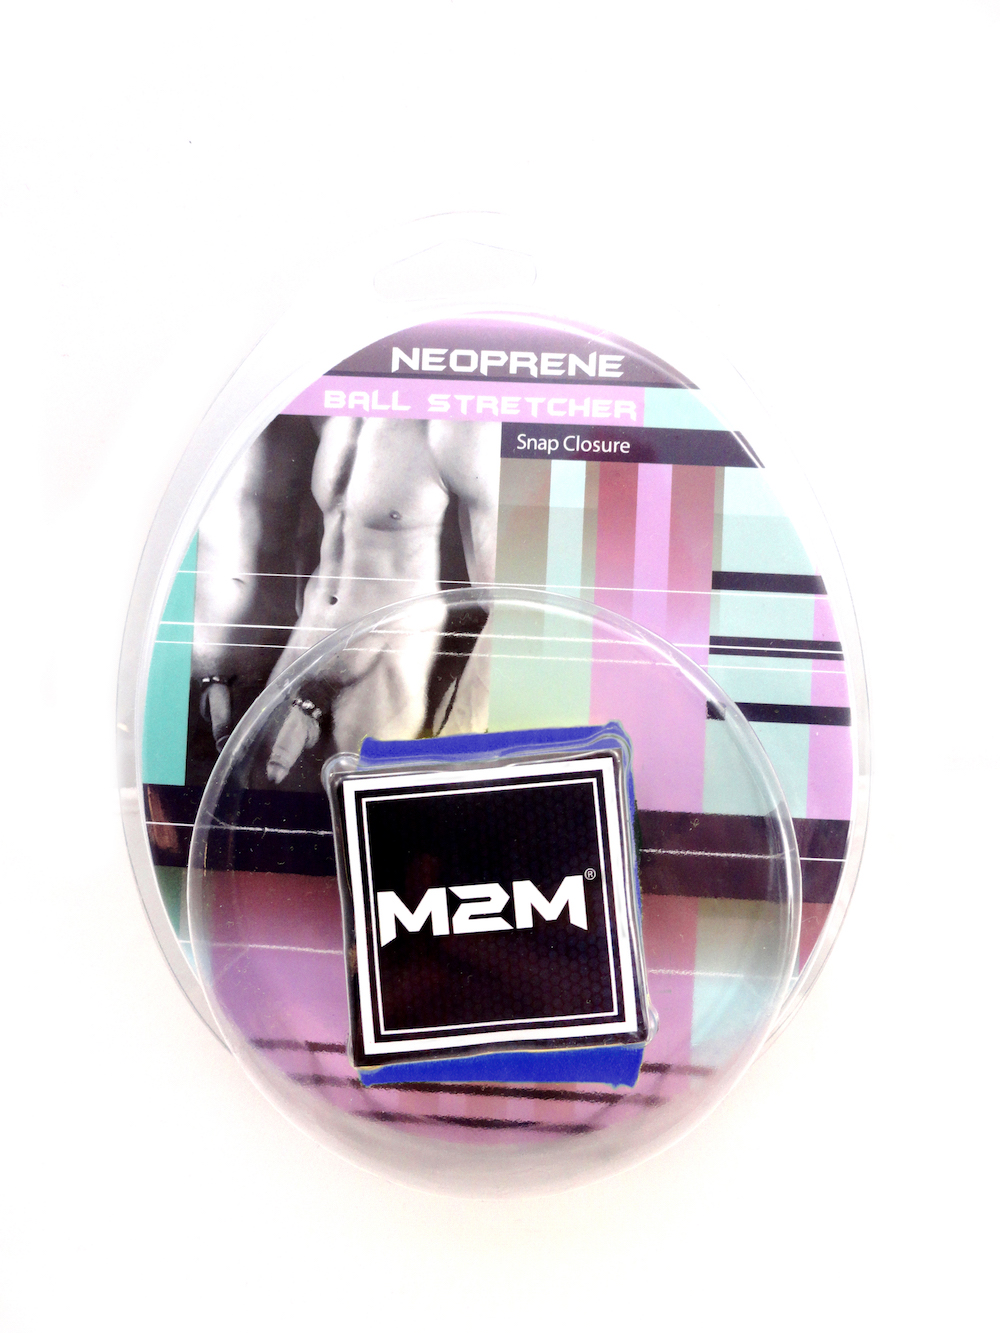 M2M NEOPRENE BALL STRETCHER 1 INCH - BLUE